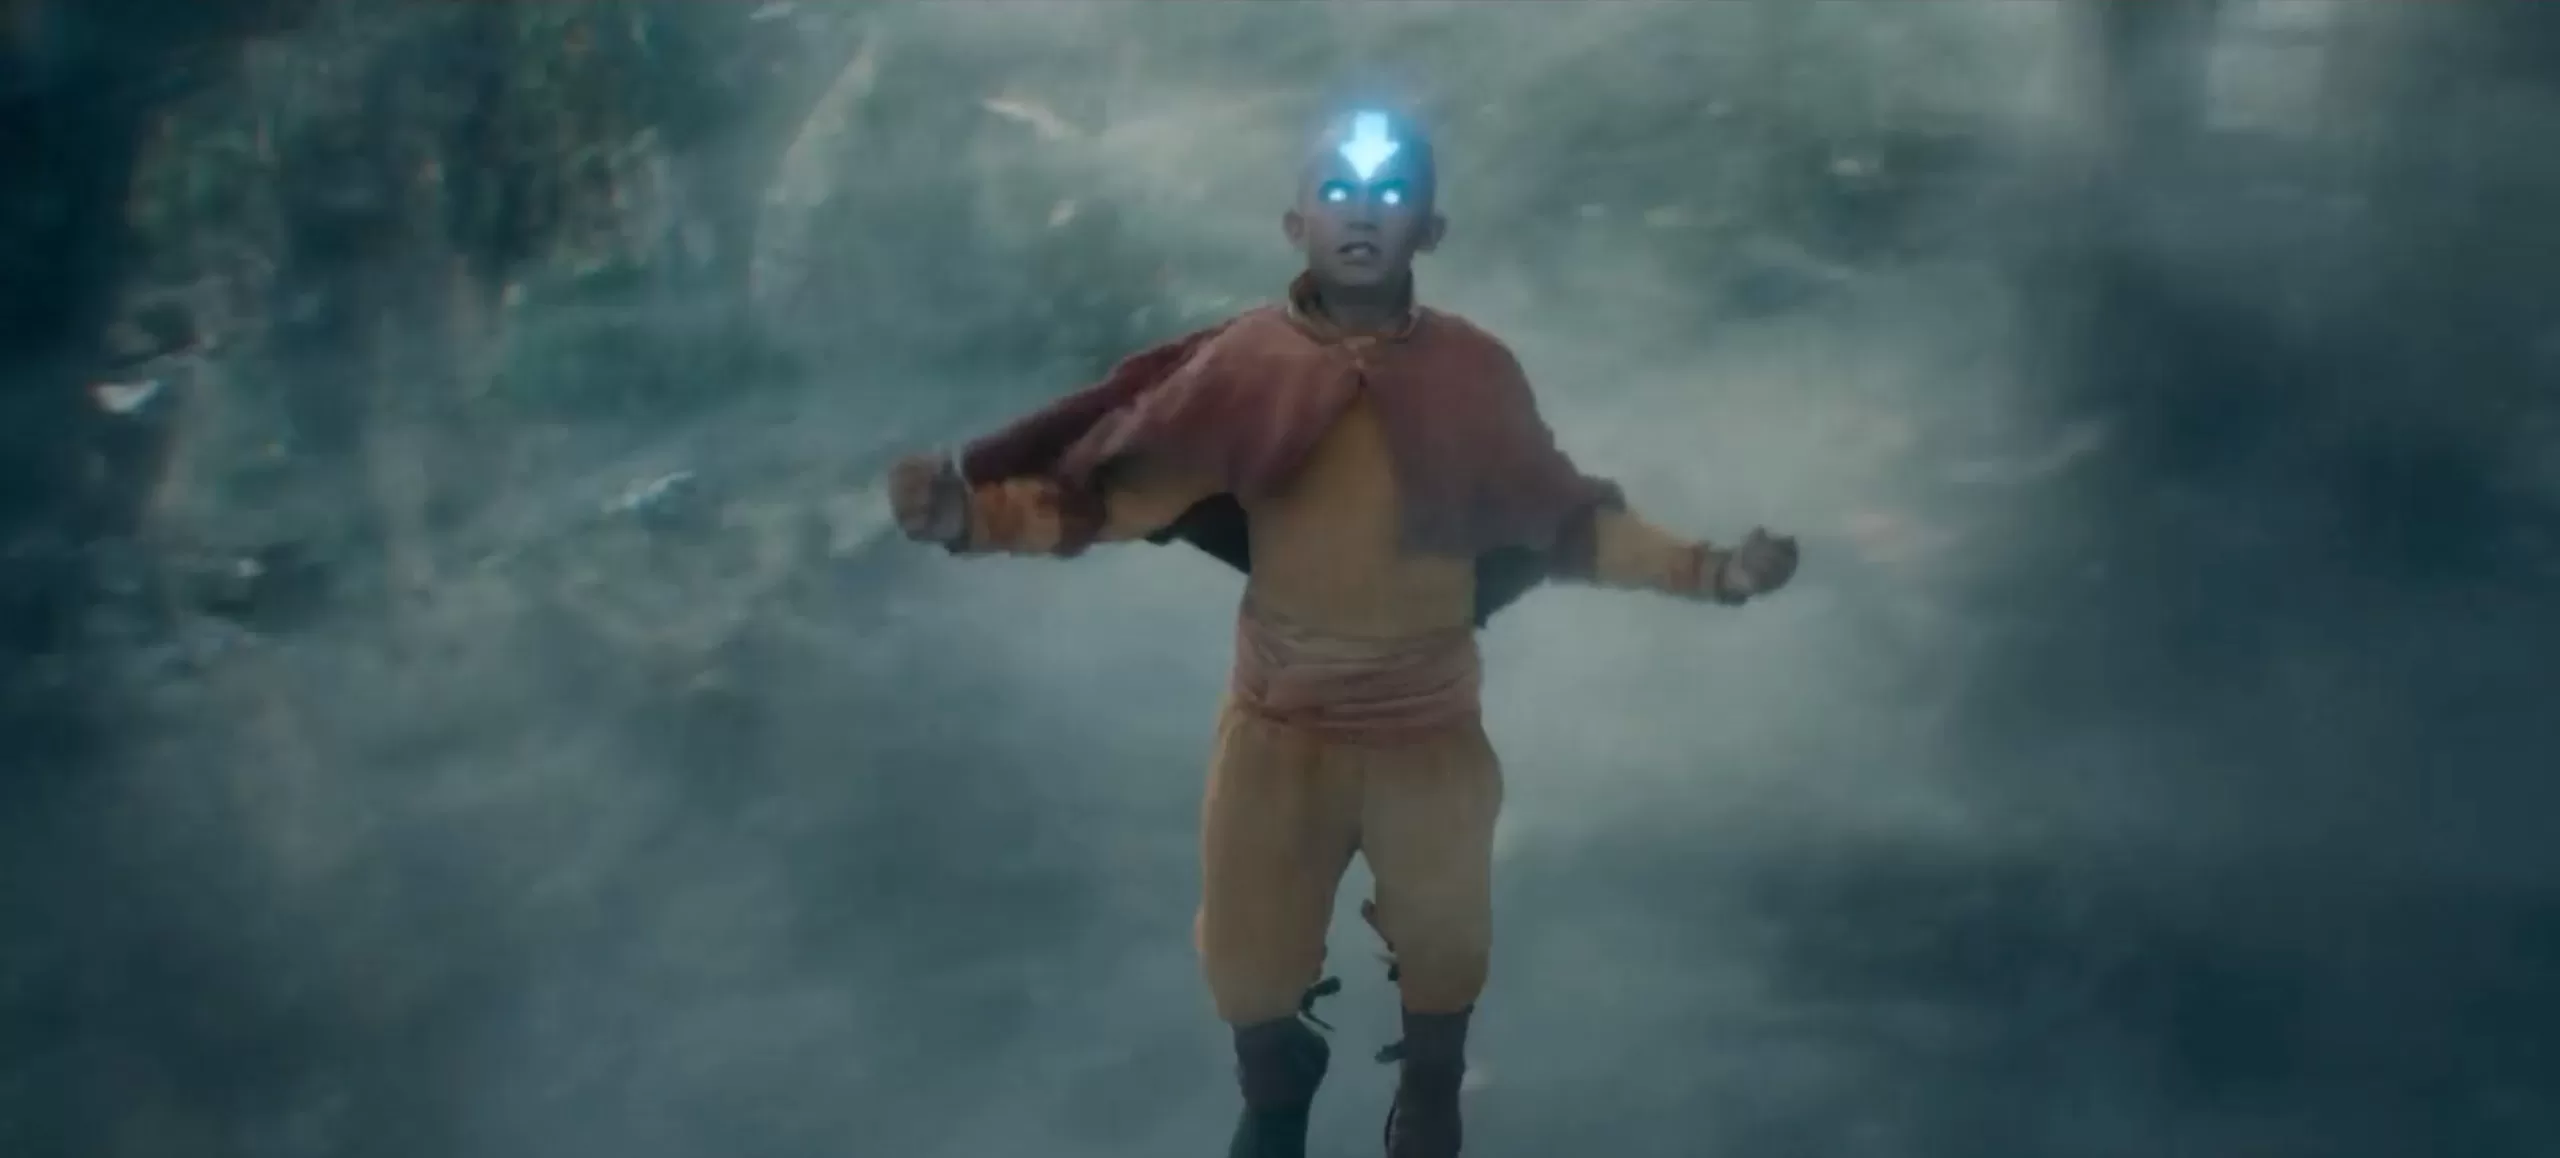 Avatar: The Last Airbender Episode 1